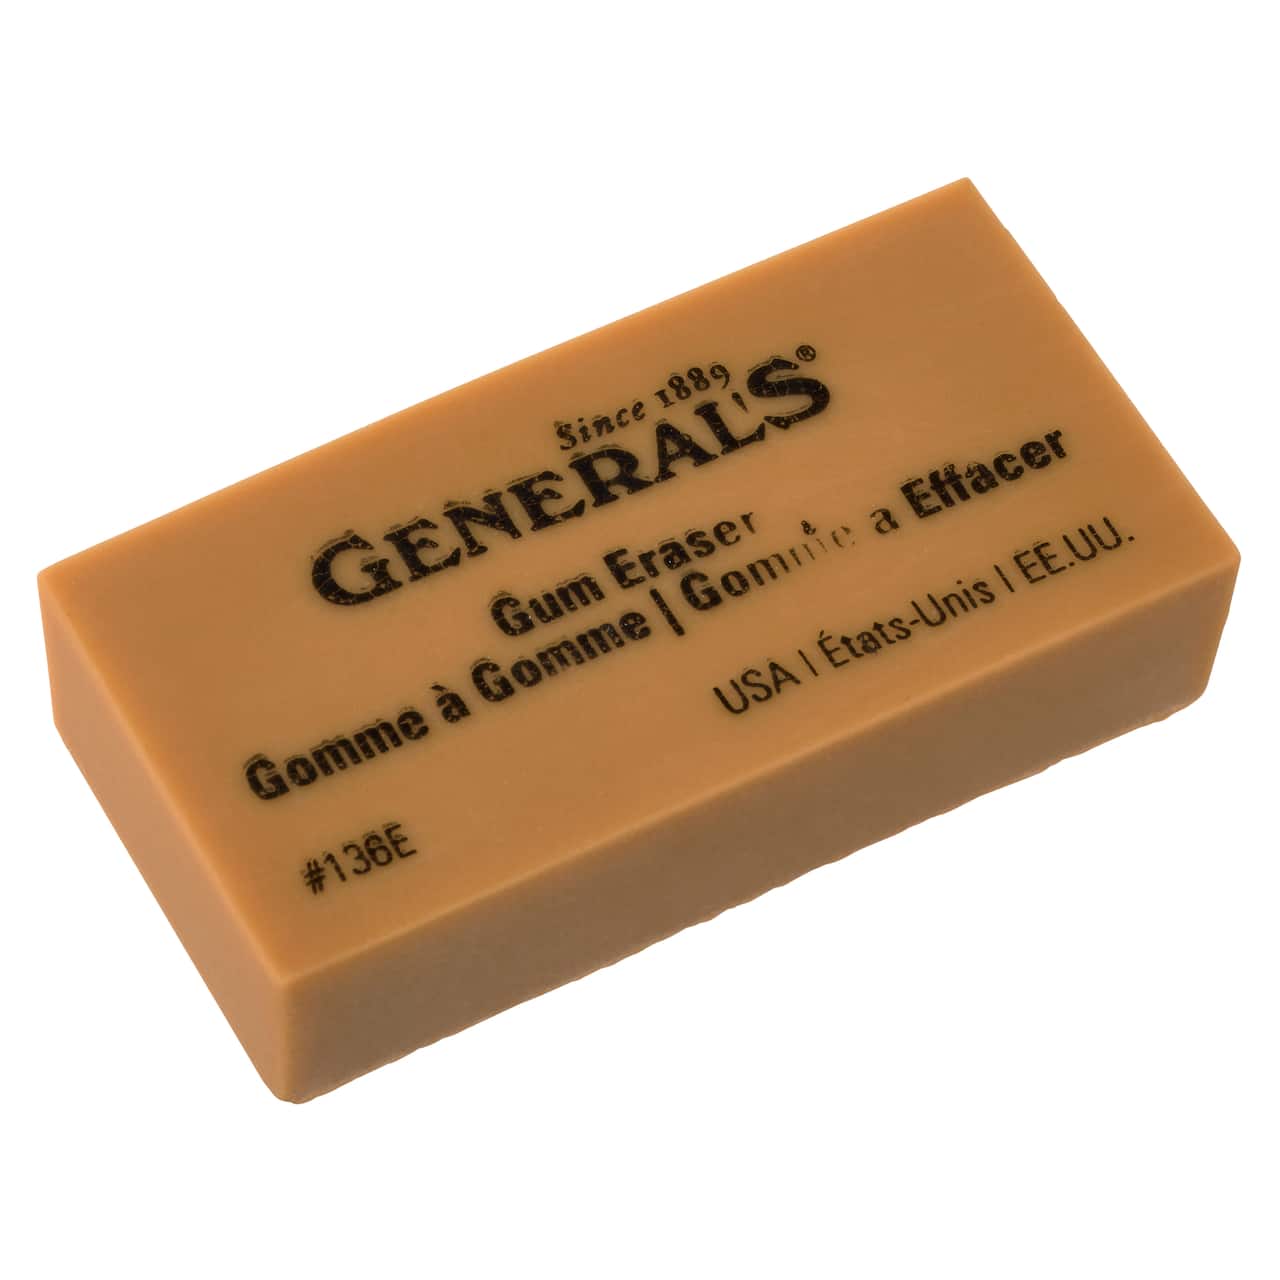 General&#x27;s&#xAE; Gum Eraser